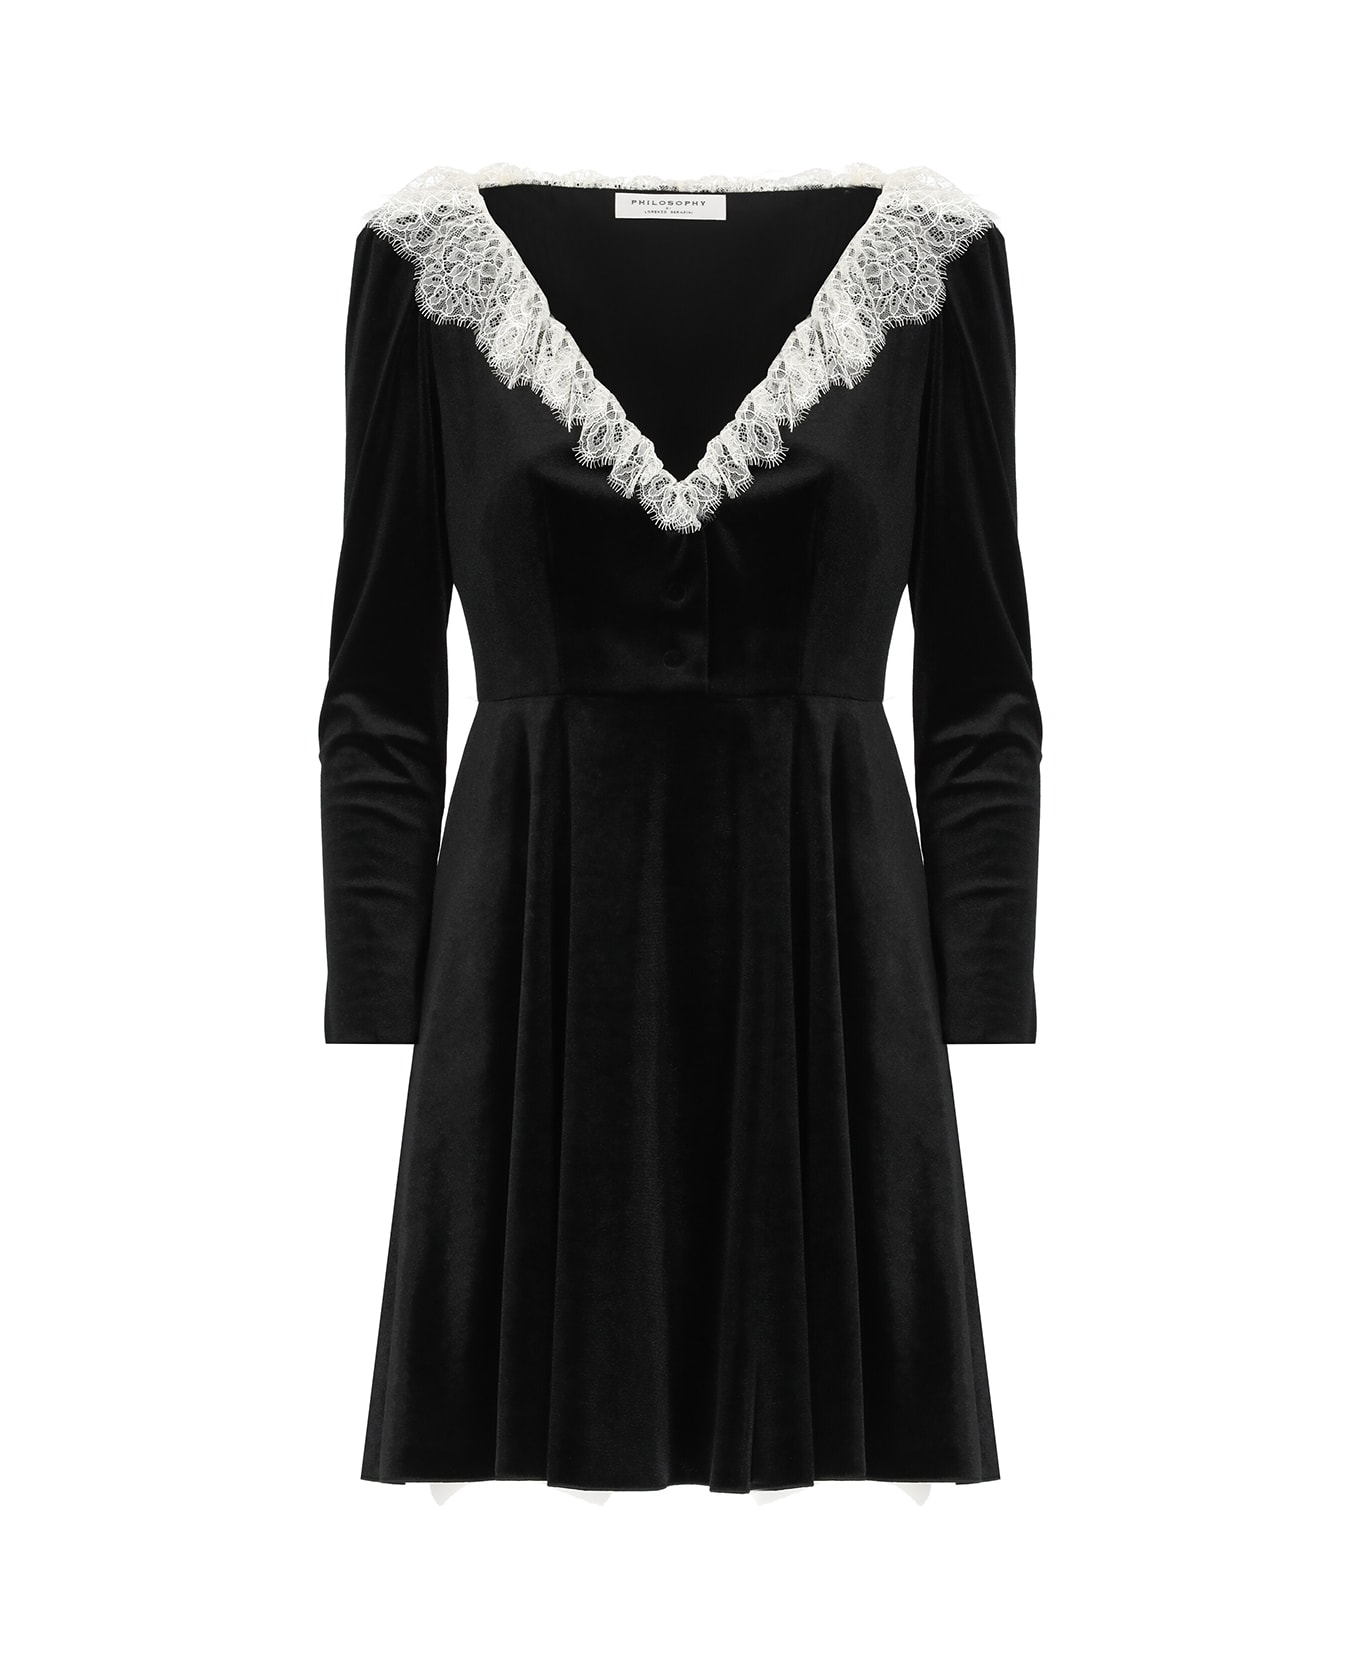 Philosophy di Lorenzo Serafini Black Stretch Velvet Dress Dress - Black